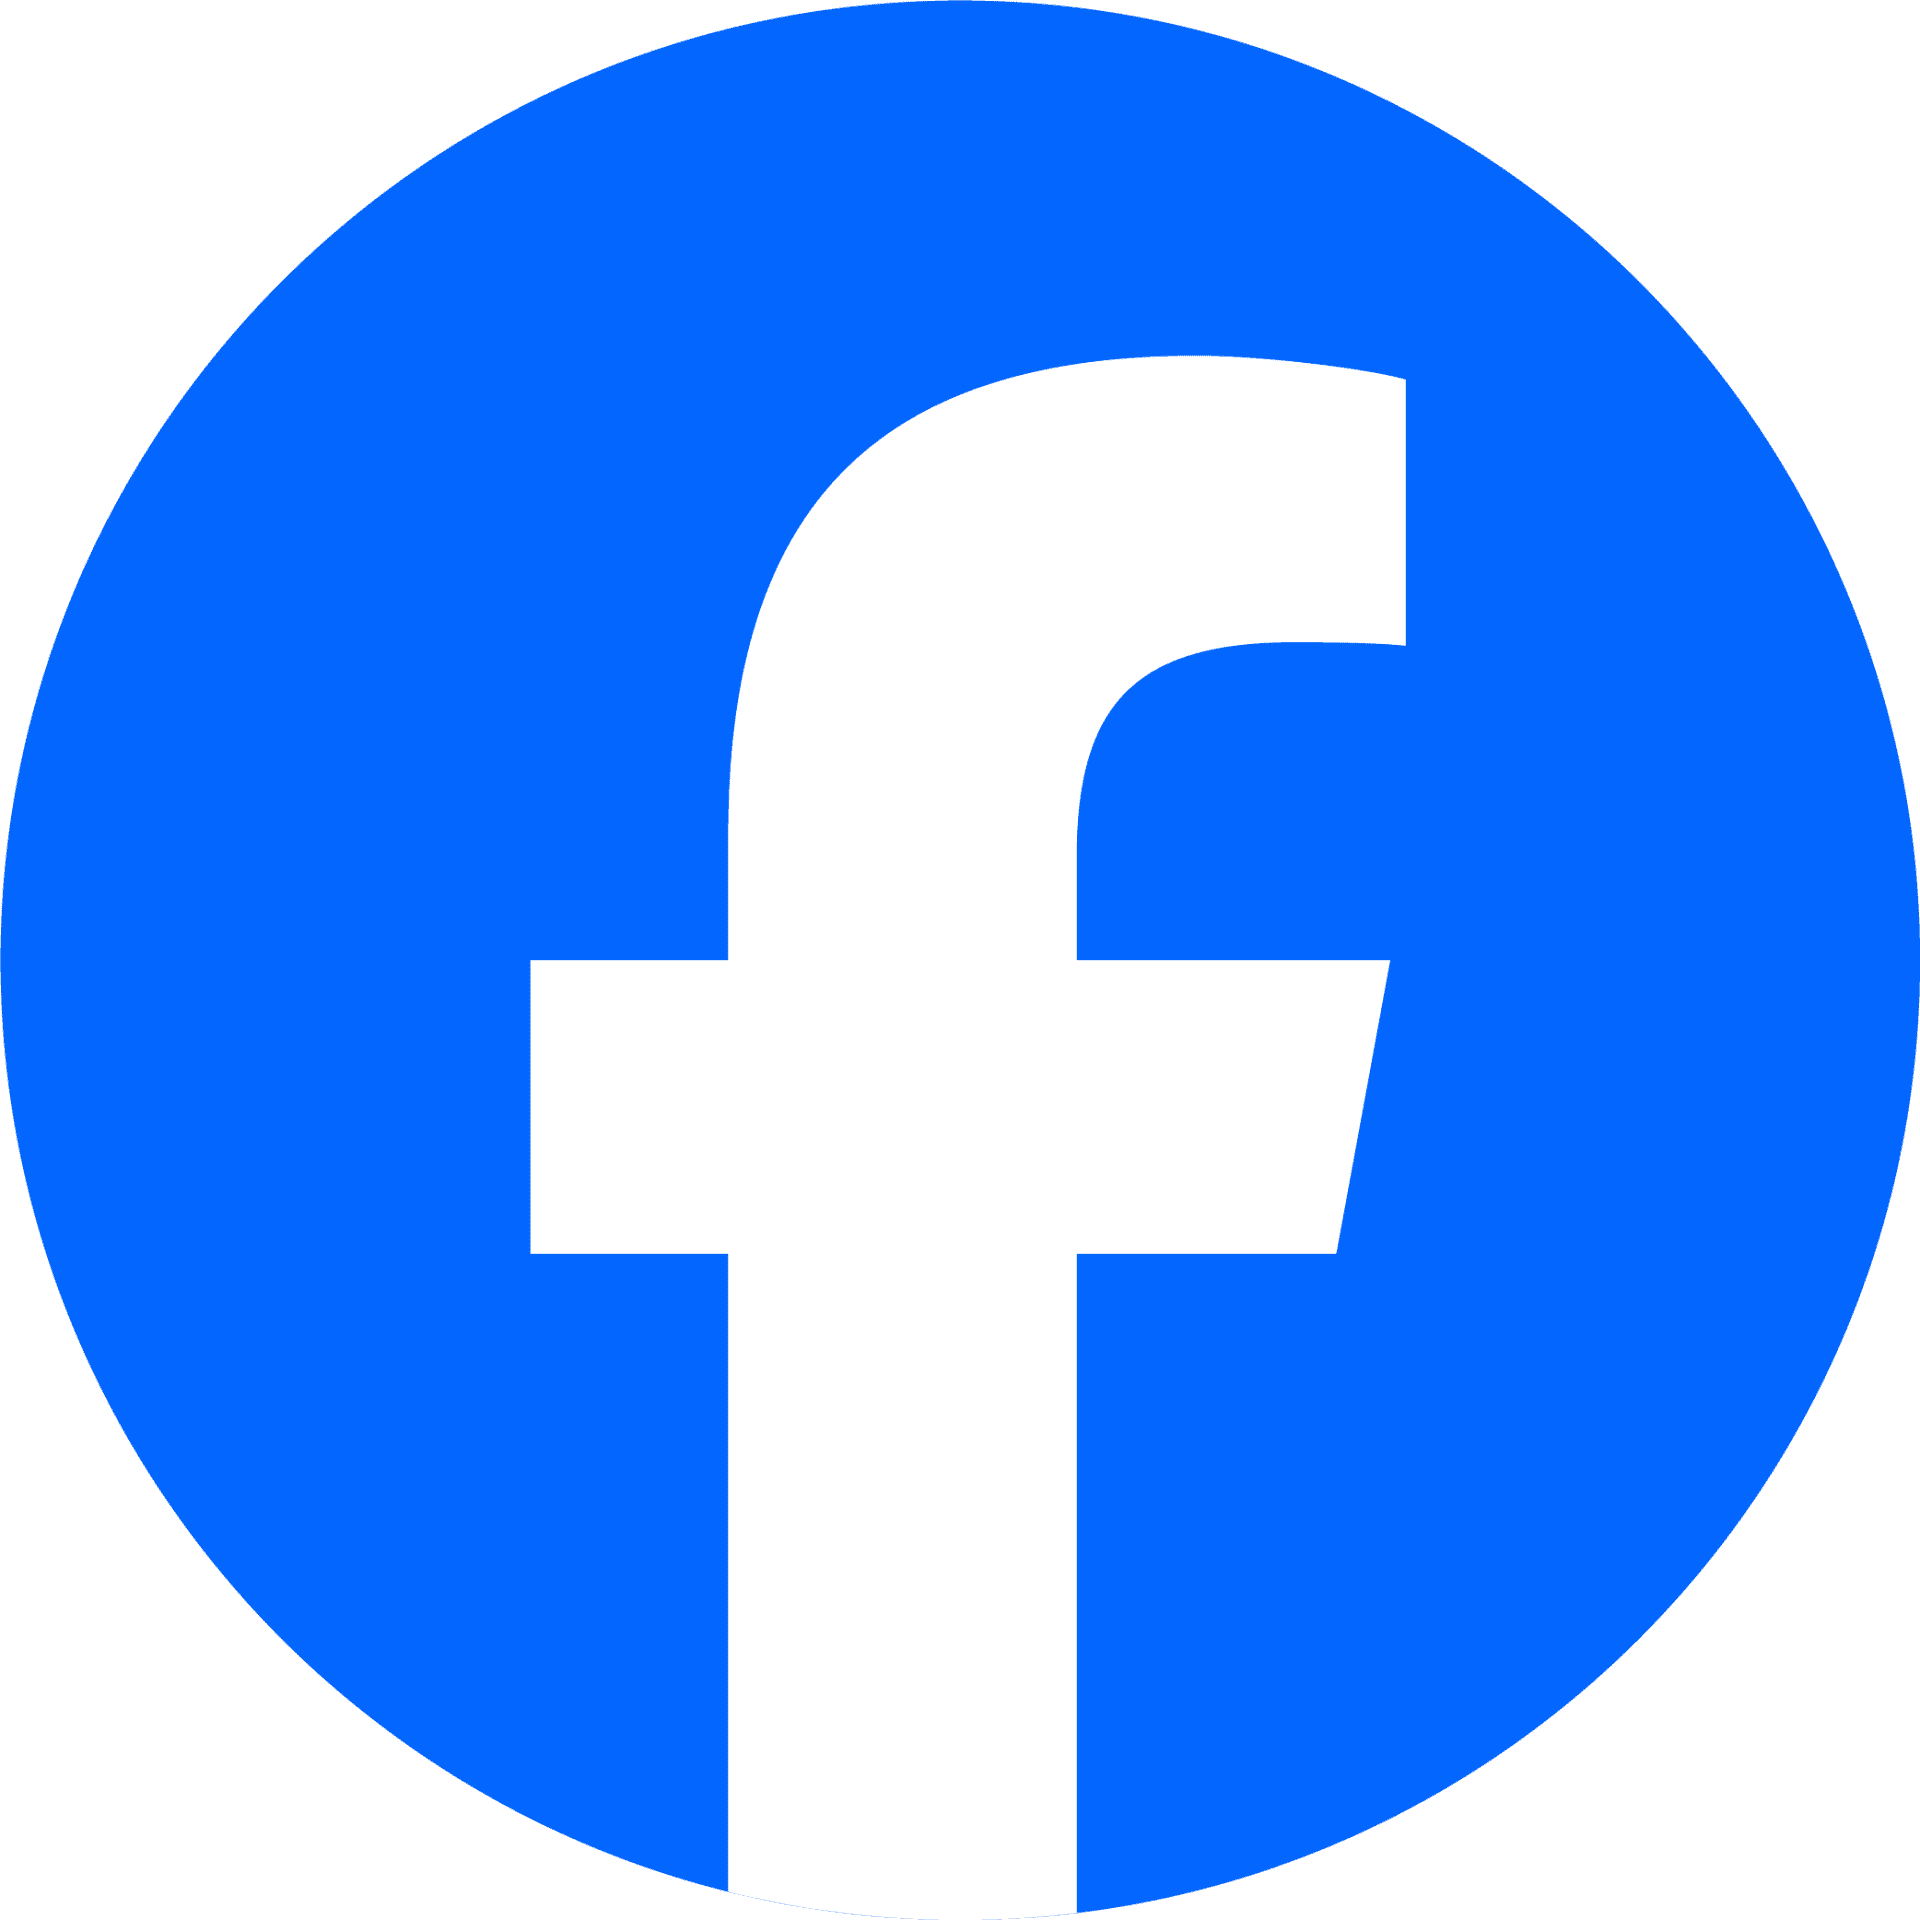 Facebook Logo Primary